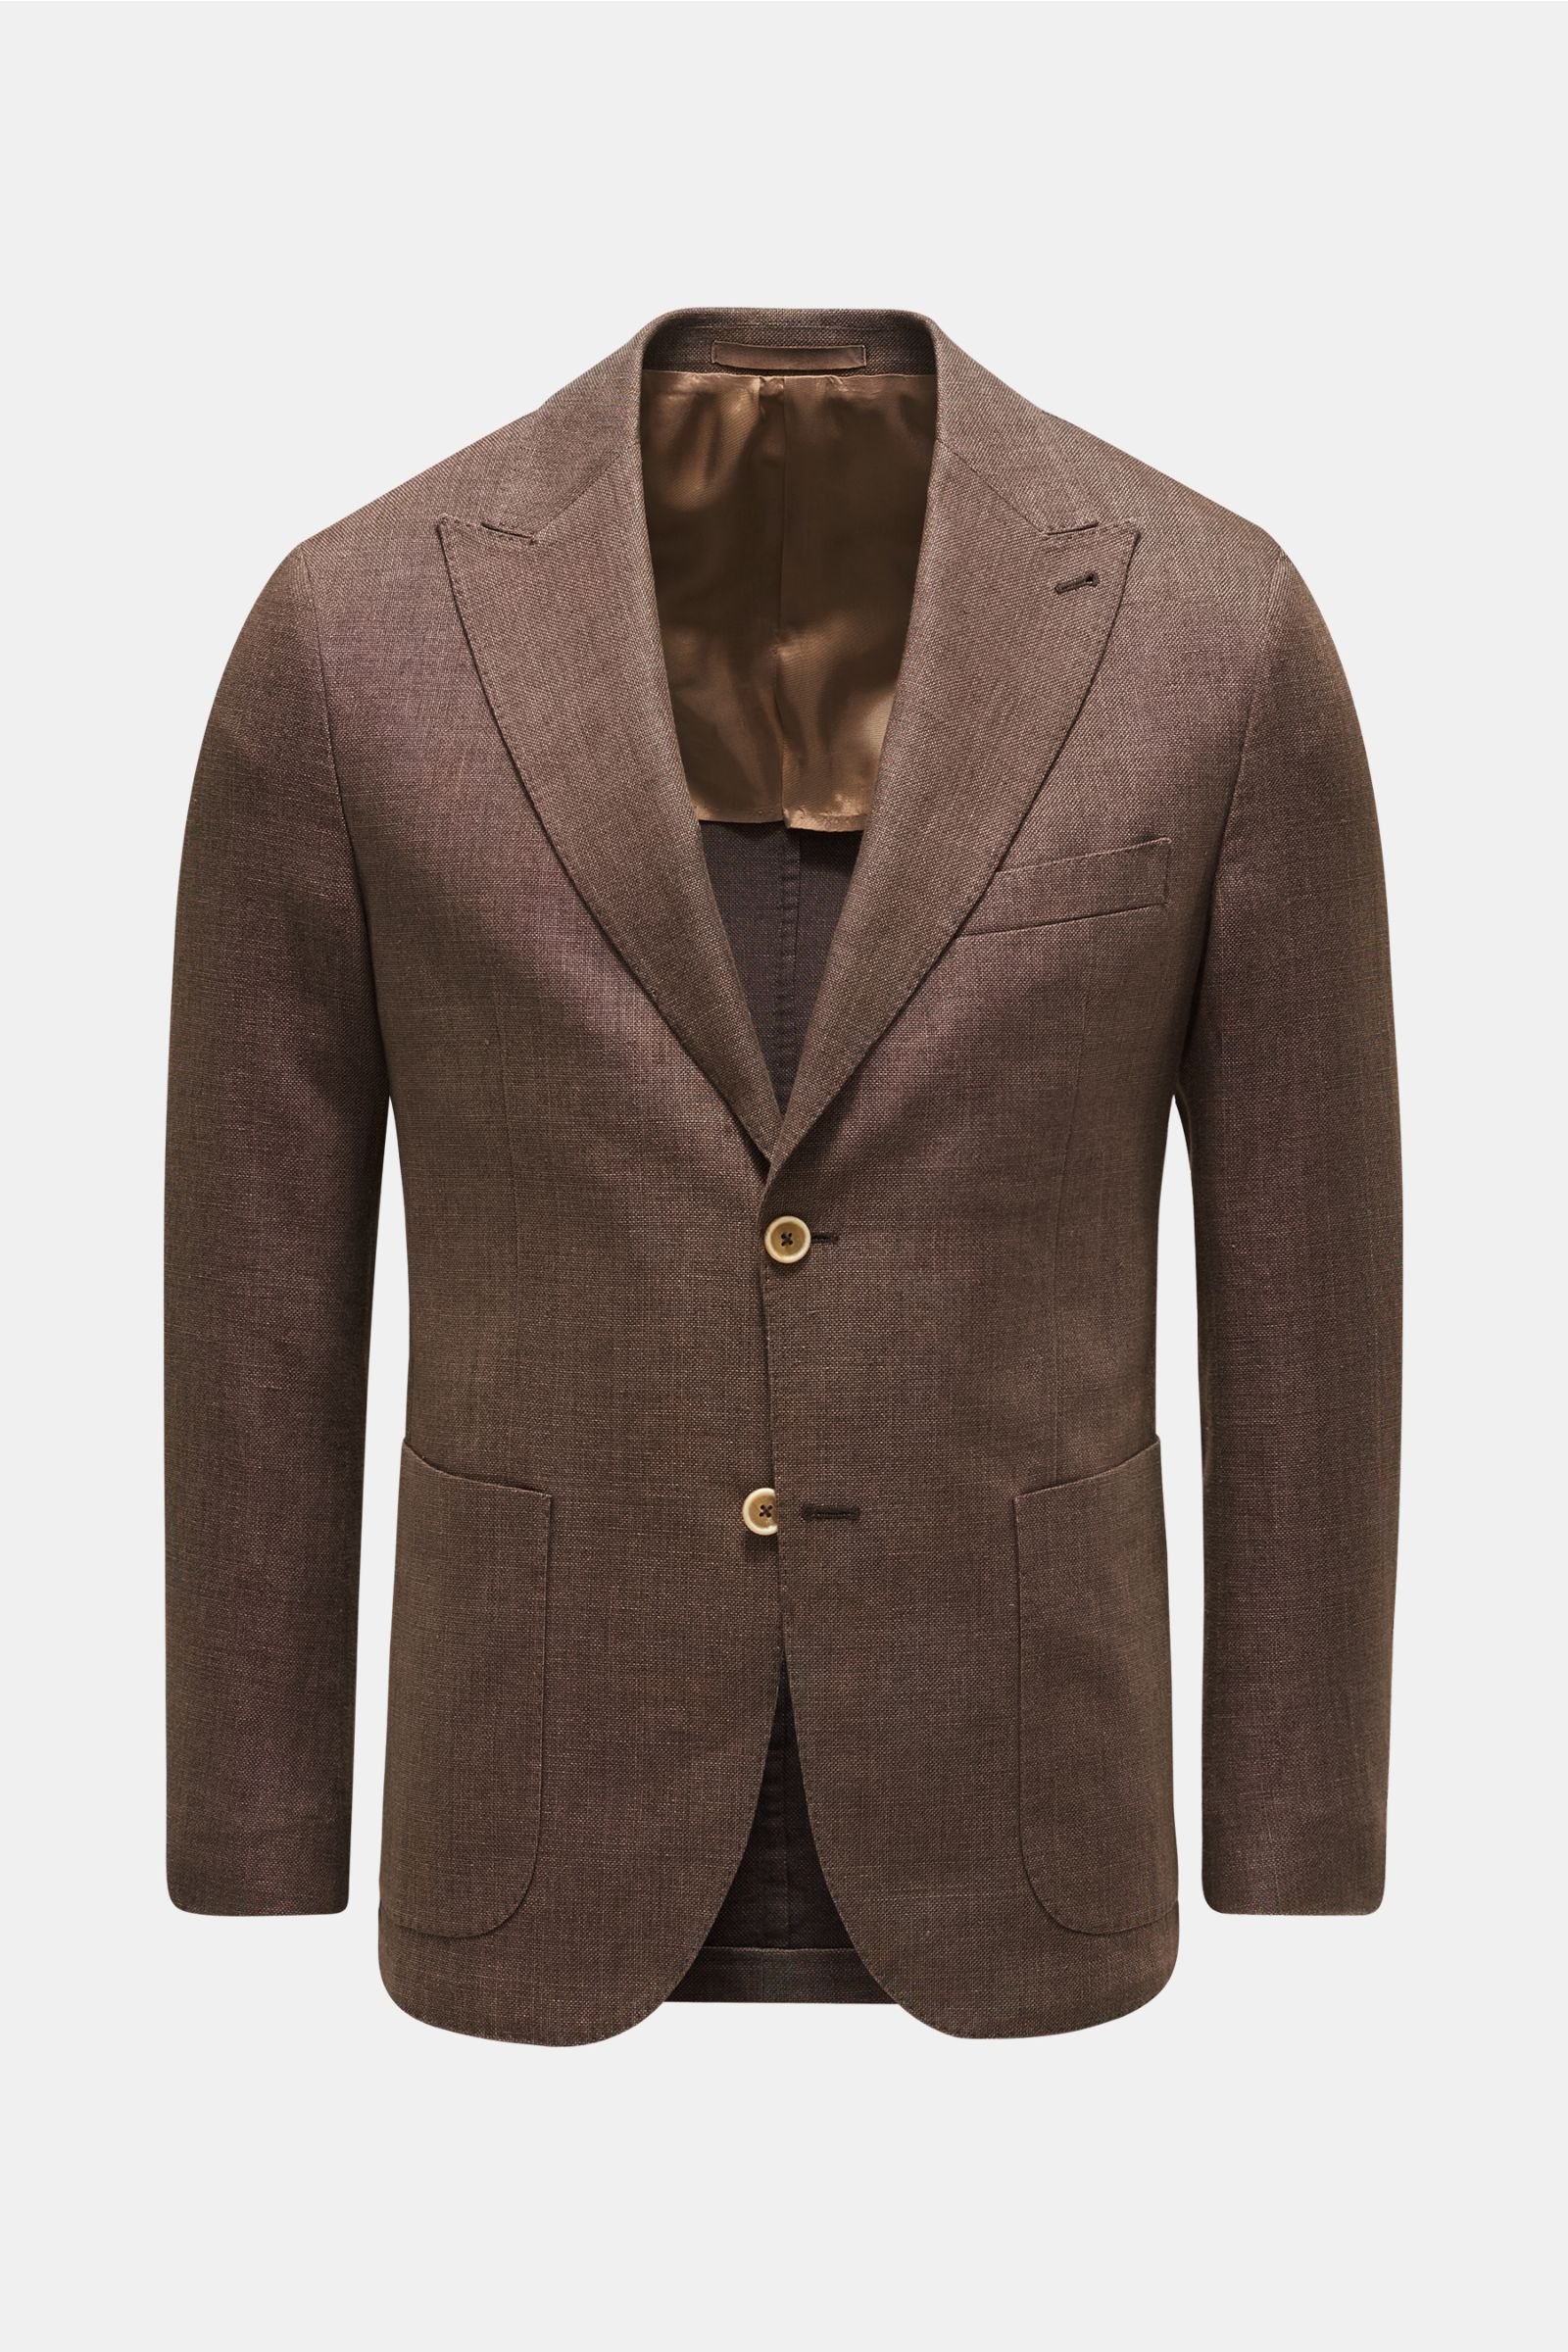 Smart-casual jacket dark brown